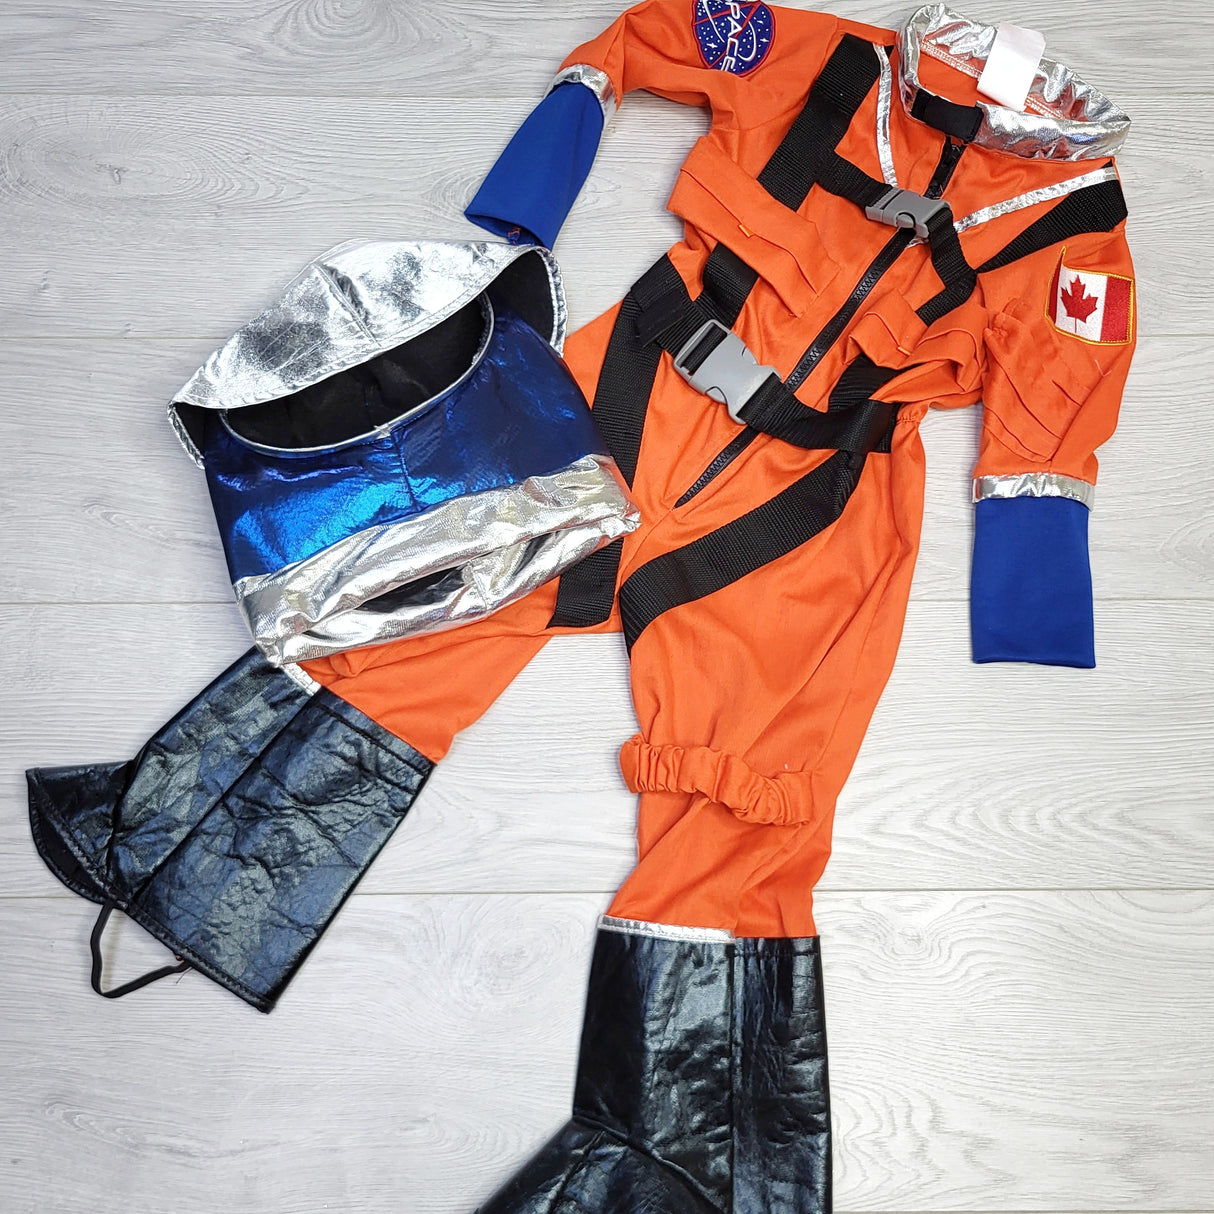 MSK1 - Astronaut 2pc costume. Size 3/4T